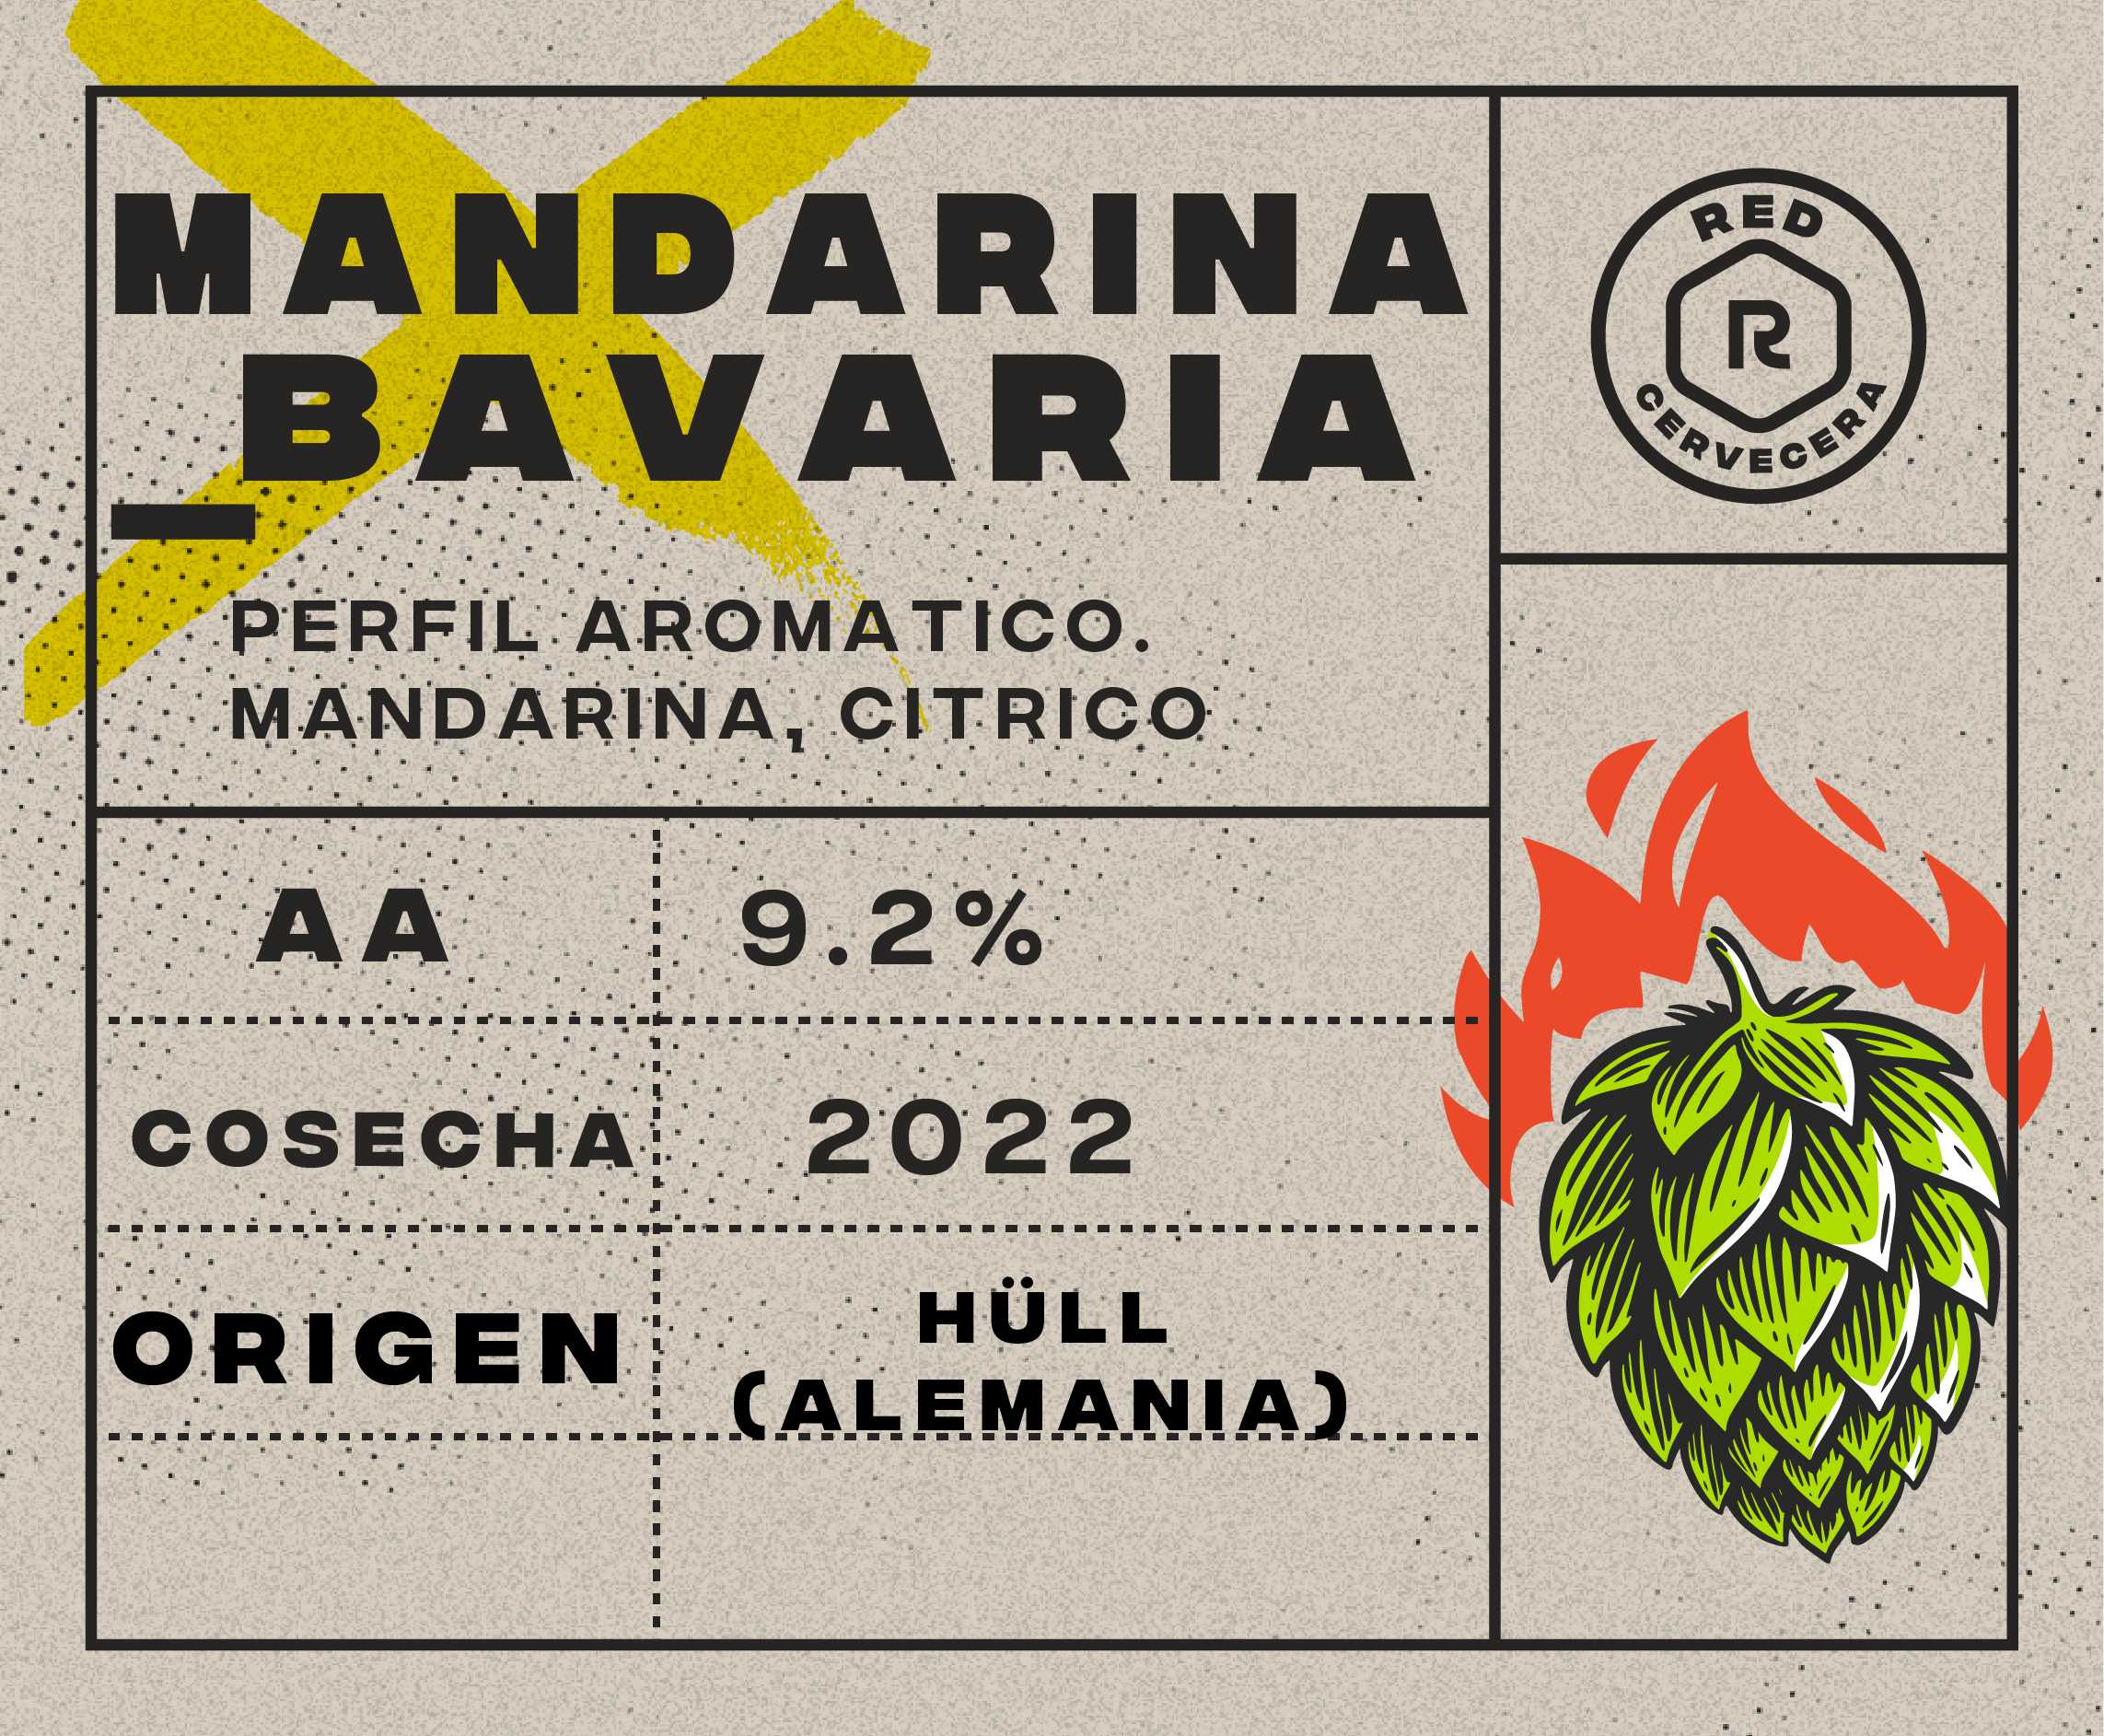 Mandarina Bavaria 9.2%AA (1g.)